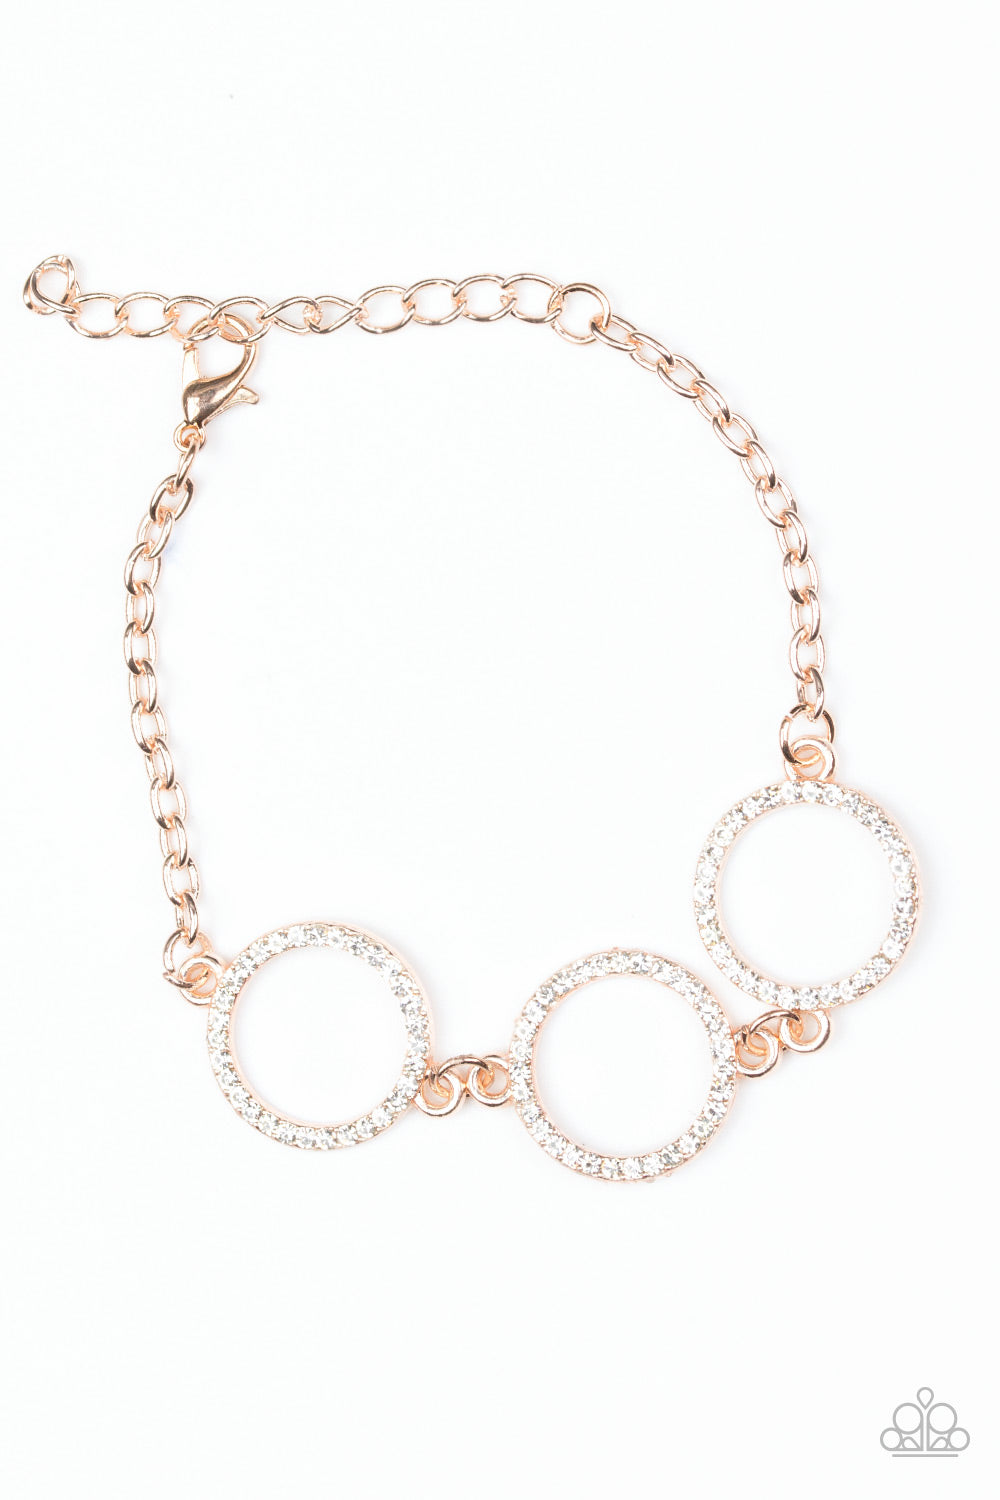 Dress The Part - Rose Gold Bracelet - Princess Glam Shop